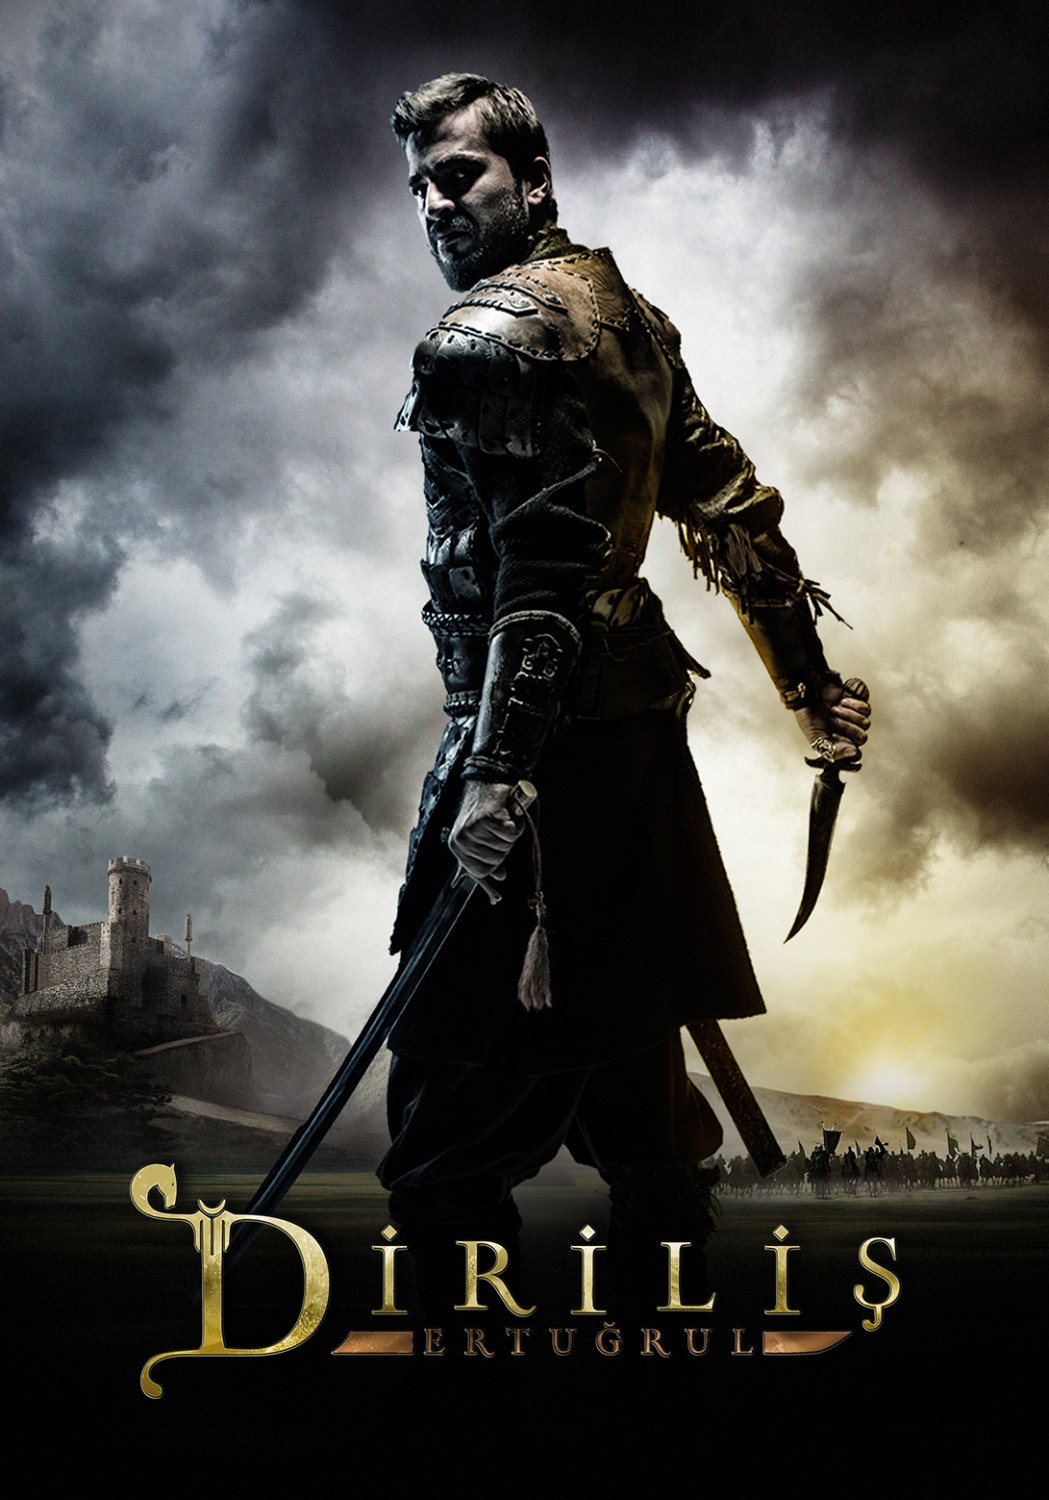 Extra Large TV Poster Image for Dirilis: Ertugrul (#1 of 30)